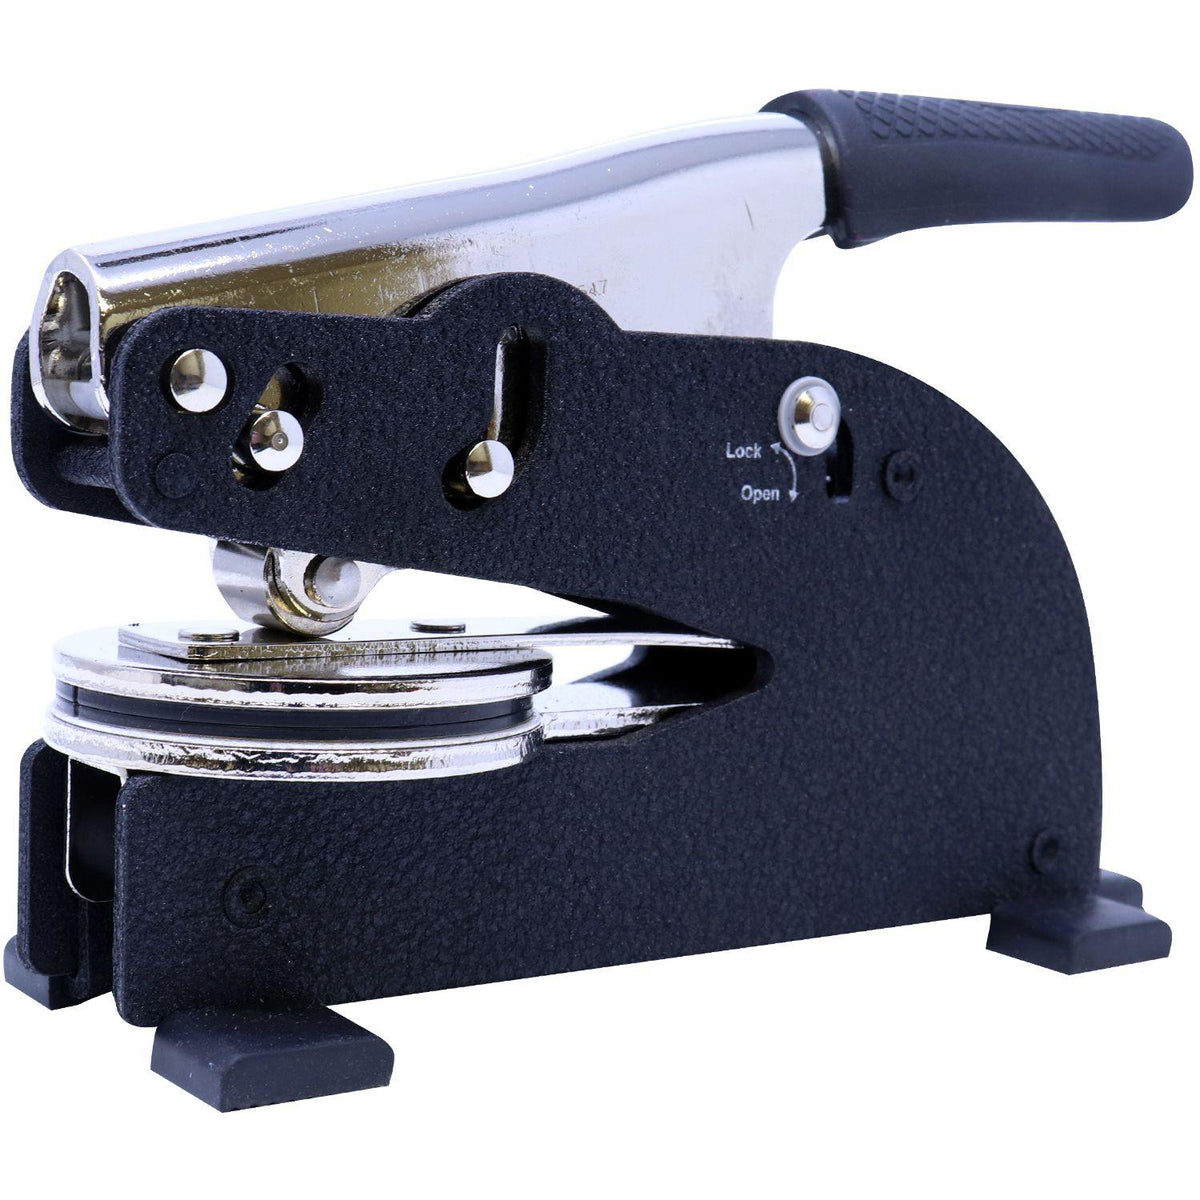 Public Weighmaster Long Reach Desk Seal Embosser - Engineer Seal Stamps - Embosser Type_Desk, Embosser Type_Long Reach, Type of Use_Professional, Use_Heavy Duty, validate-product-description